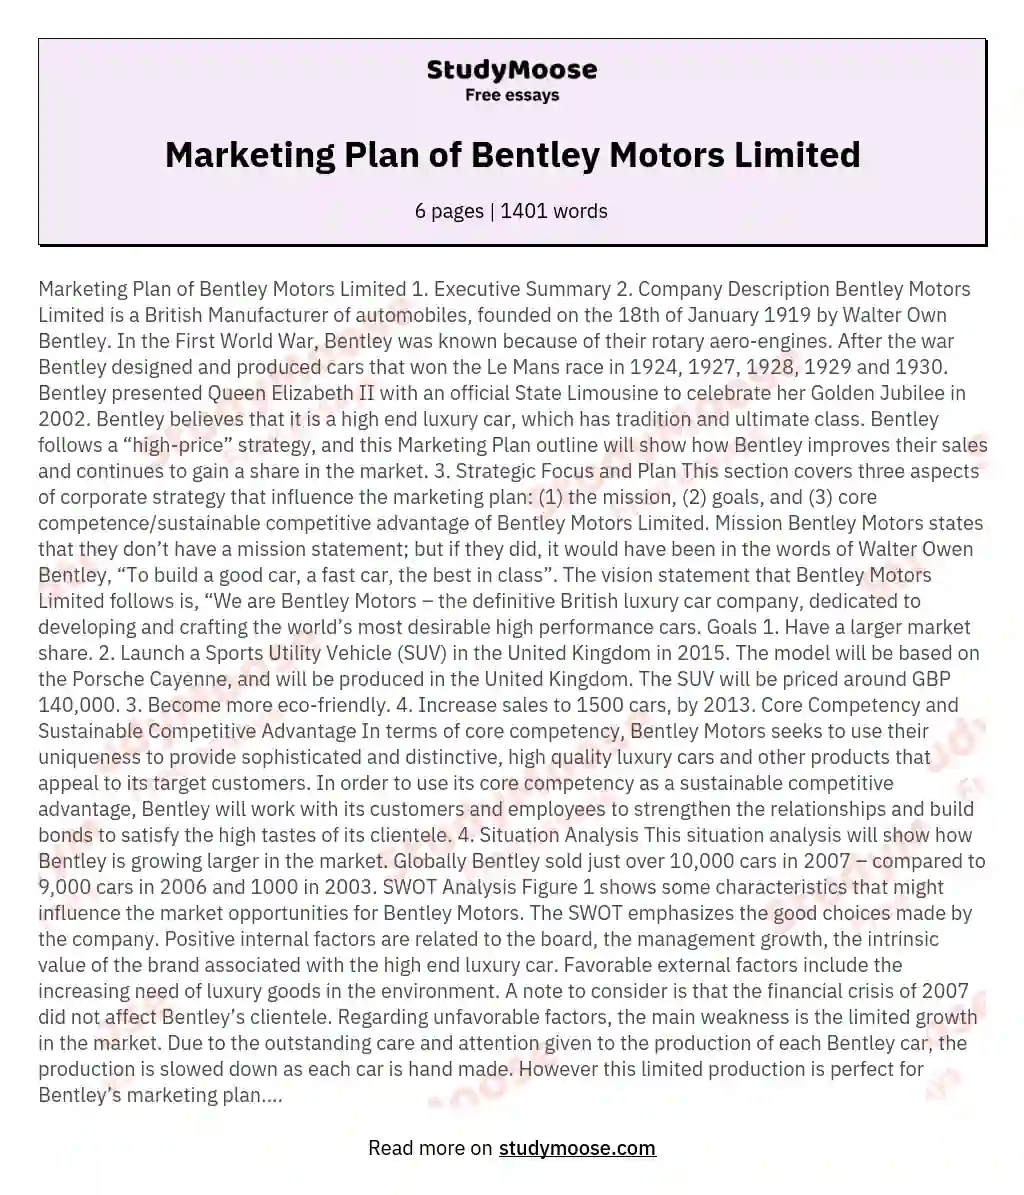 Marketing Plan of Bentley Motors Limited essay